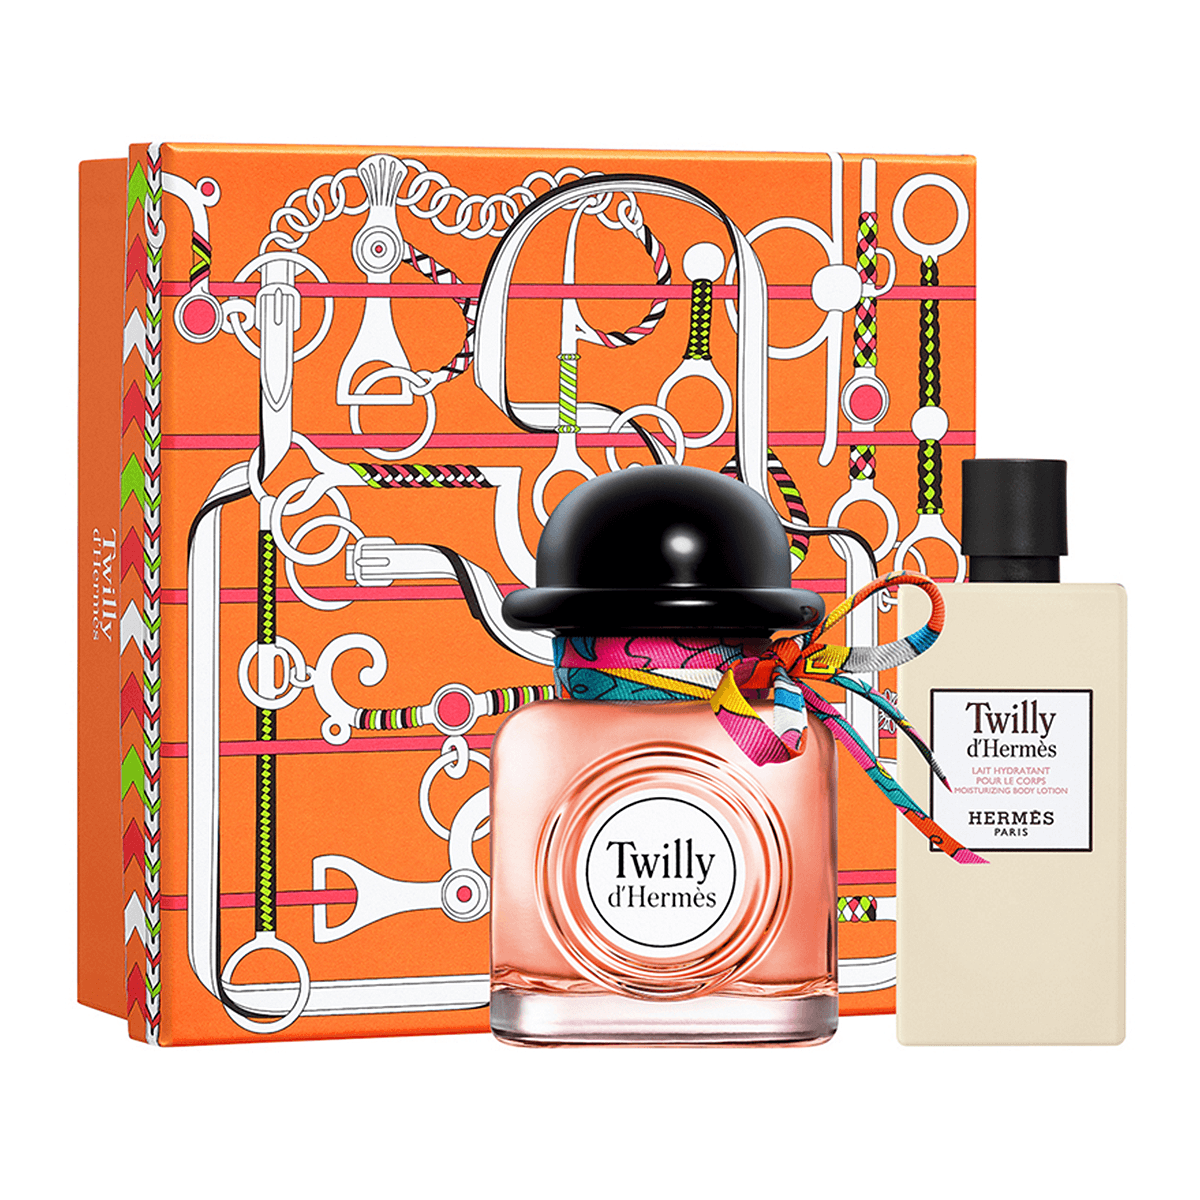 HERMÈS Twilly d'Hermes Body Lotion Gift Set - My Perfume Shop Australia